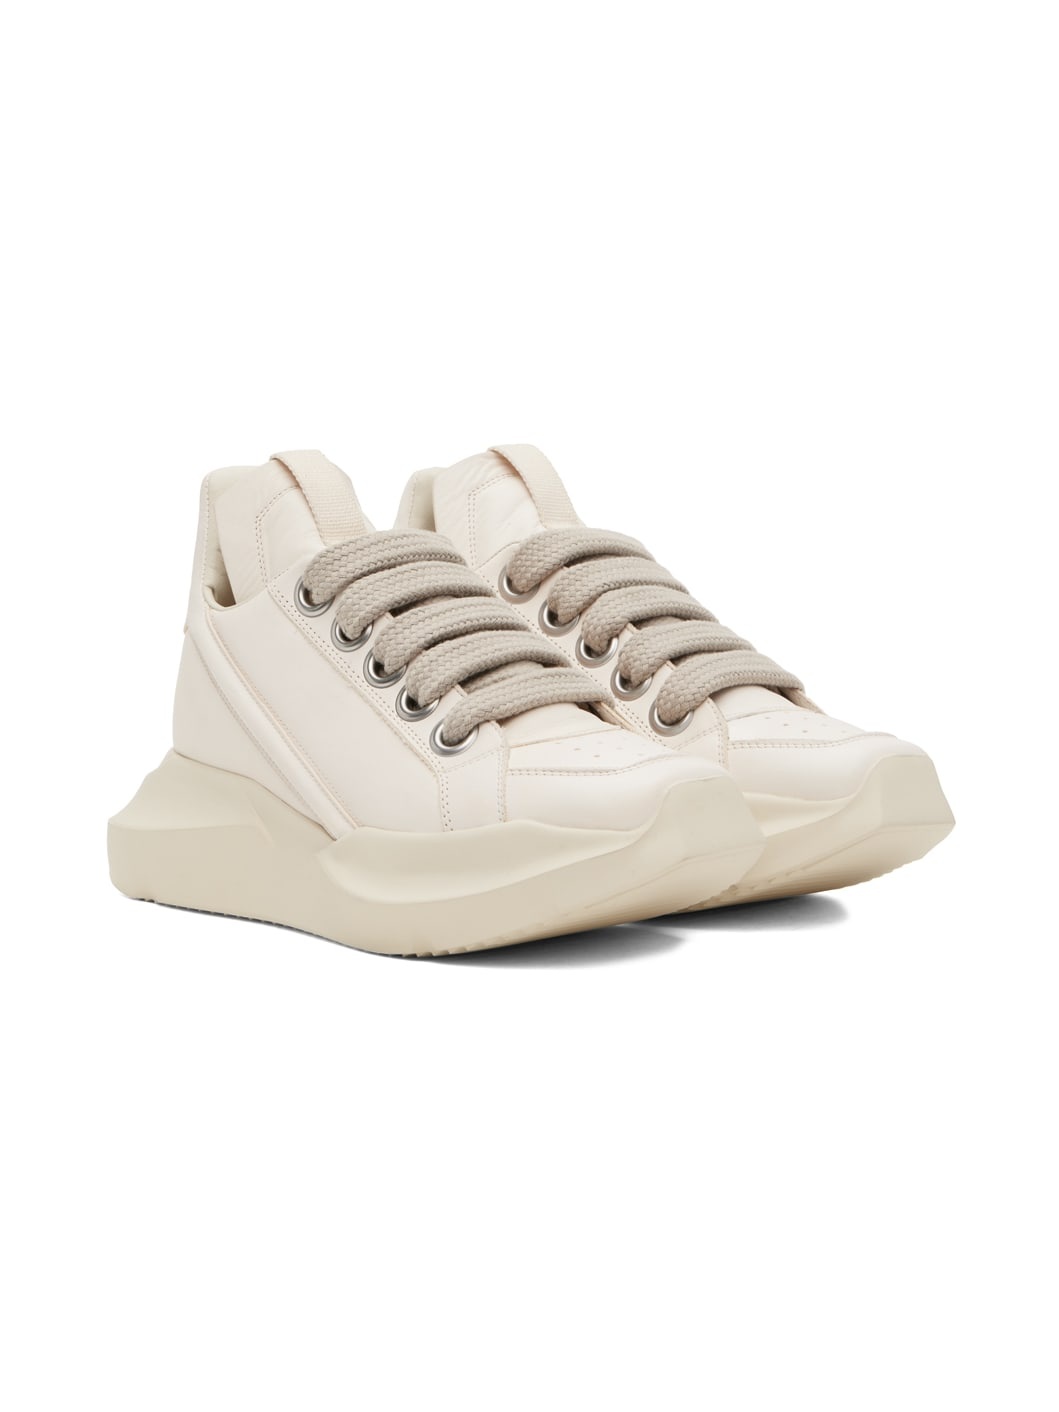 Off-White Geth Runner Sneakers - 4